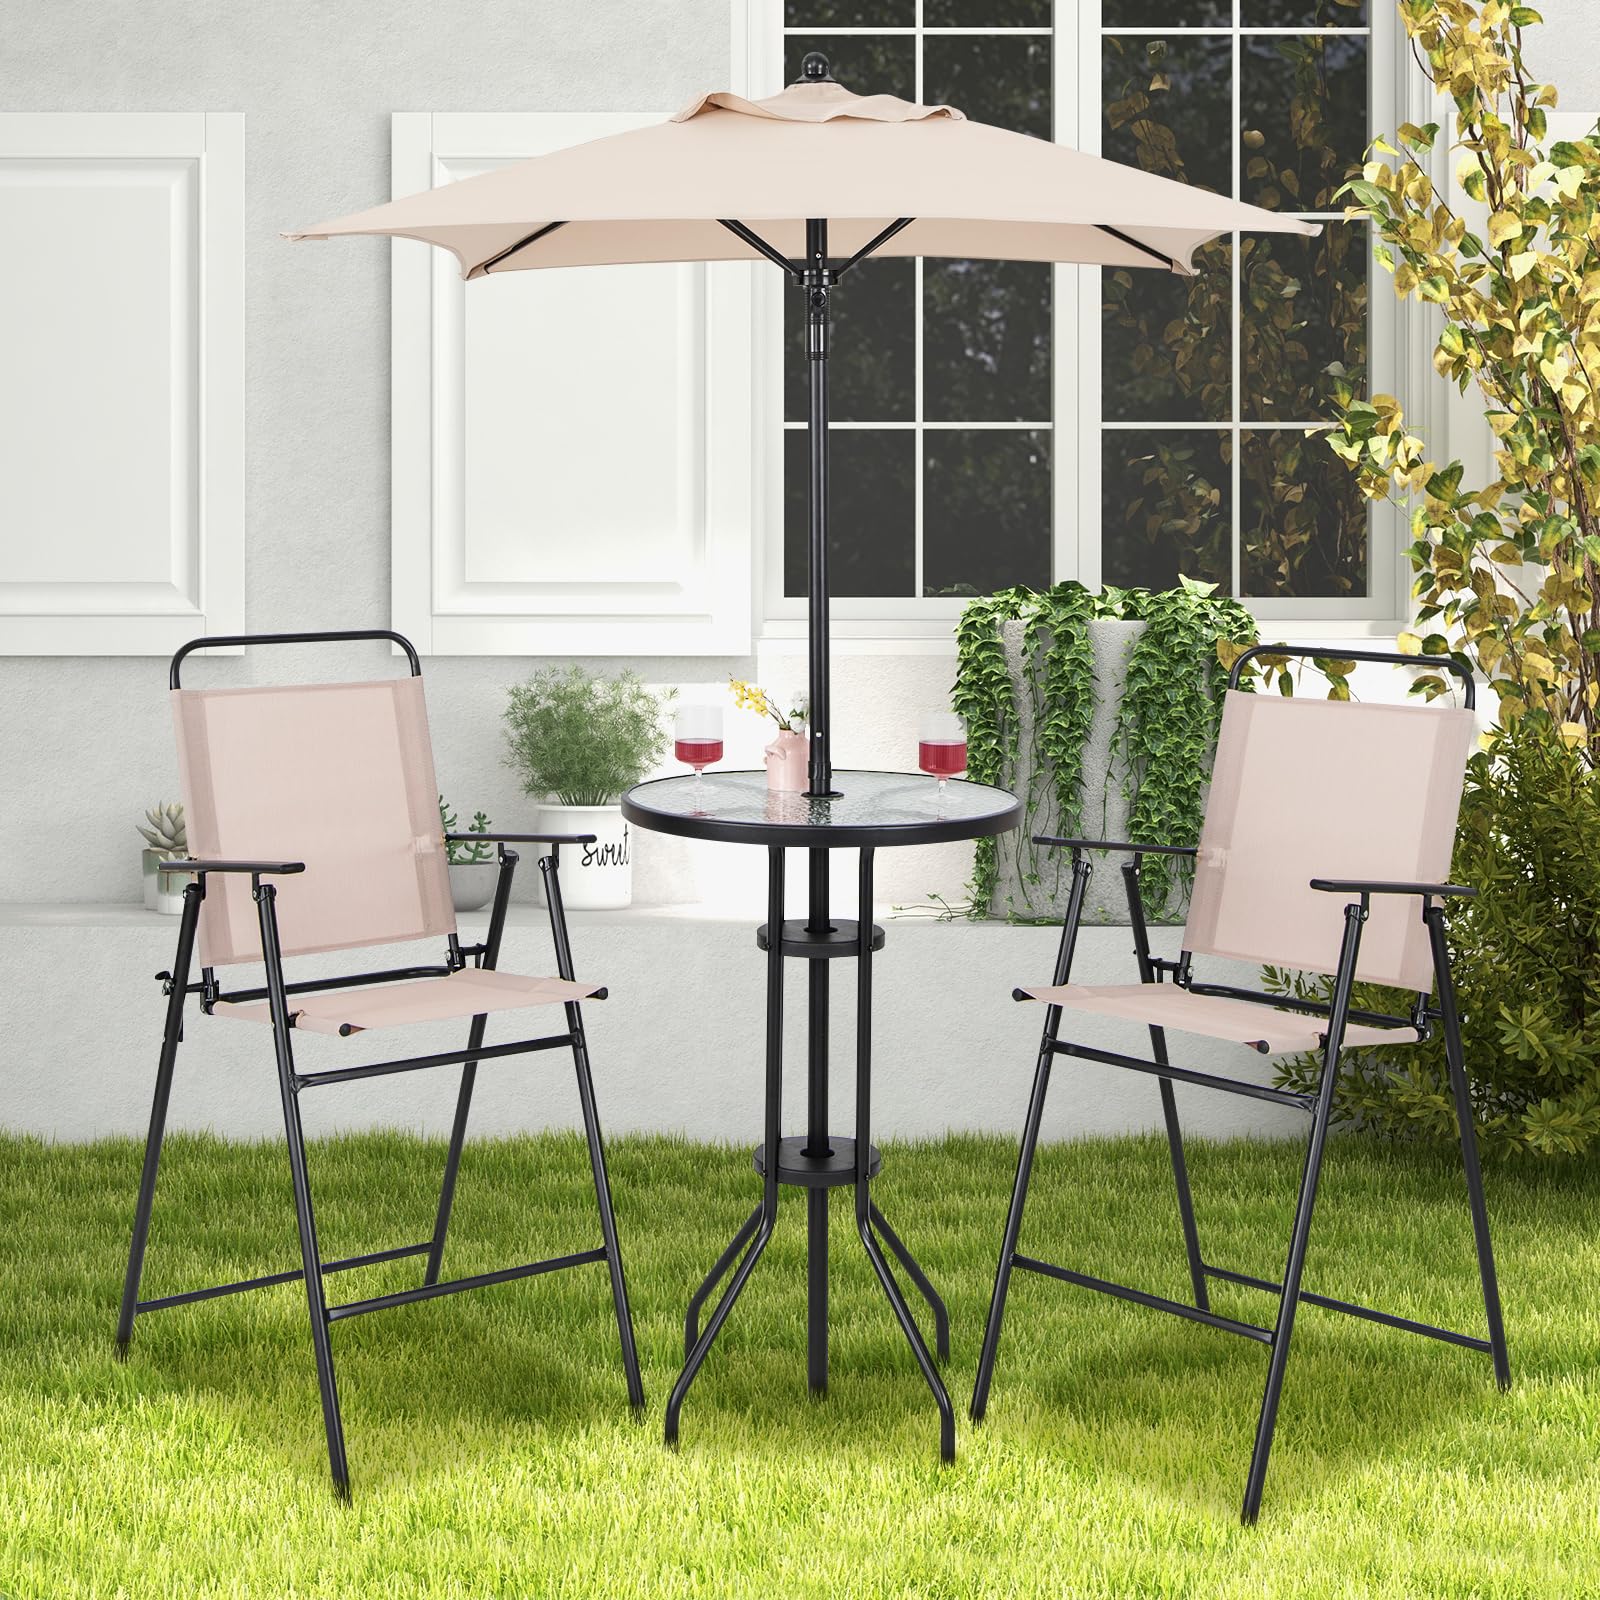 Giantex 4-Piece Outdoor Bar Set, Round High Top Bar Table with 2 Folding Counter Height Chairs & Umbrella